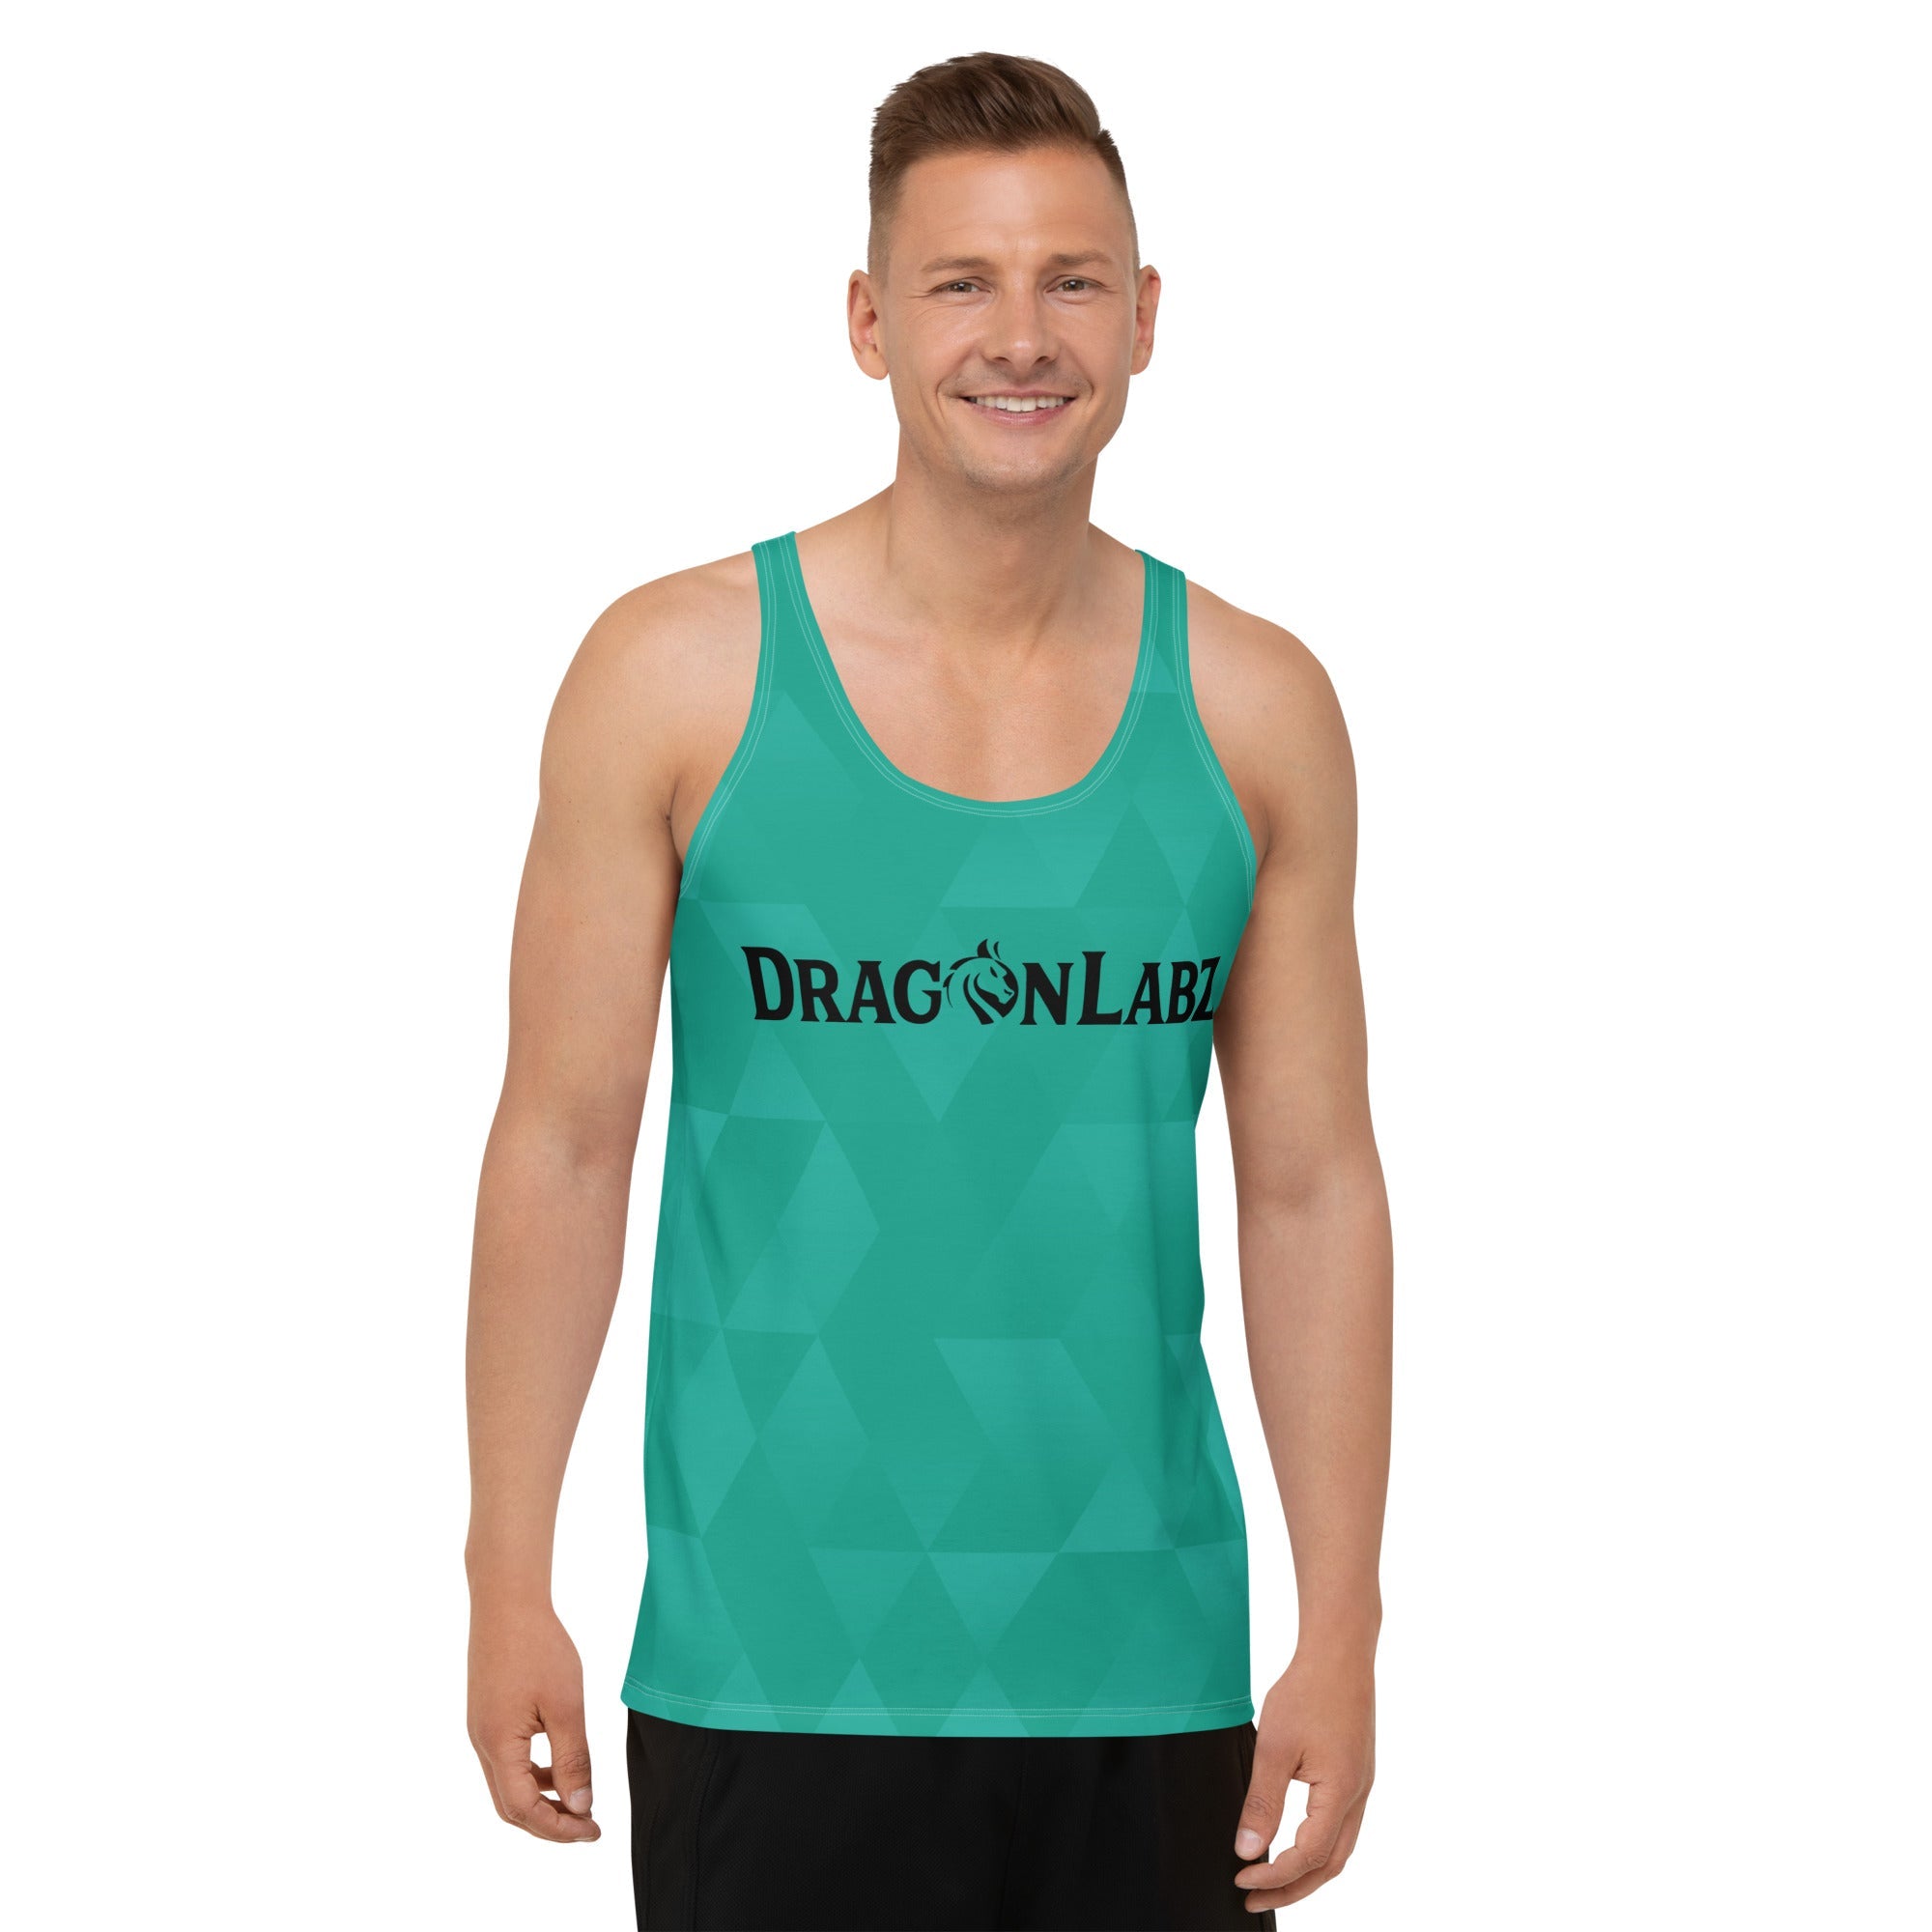 DragonLabz Emerald Tank - Krazy Muscle Nutrition Krazy Muscle Nutrition1781771_9050